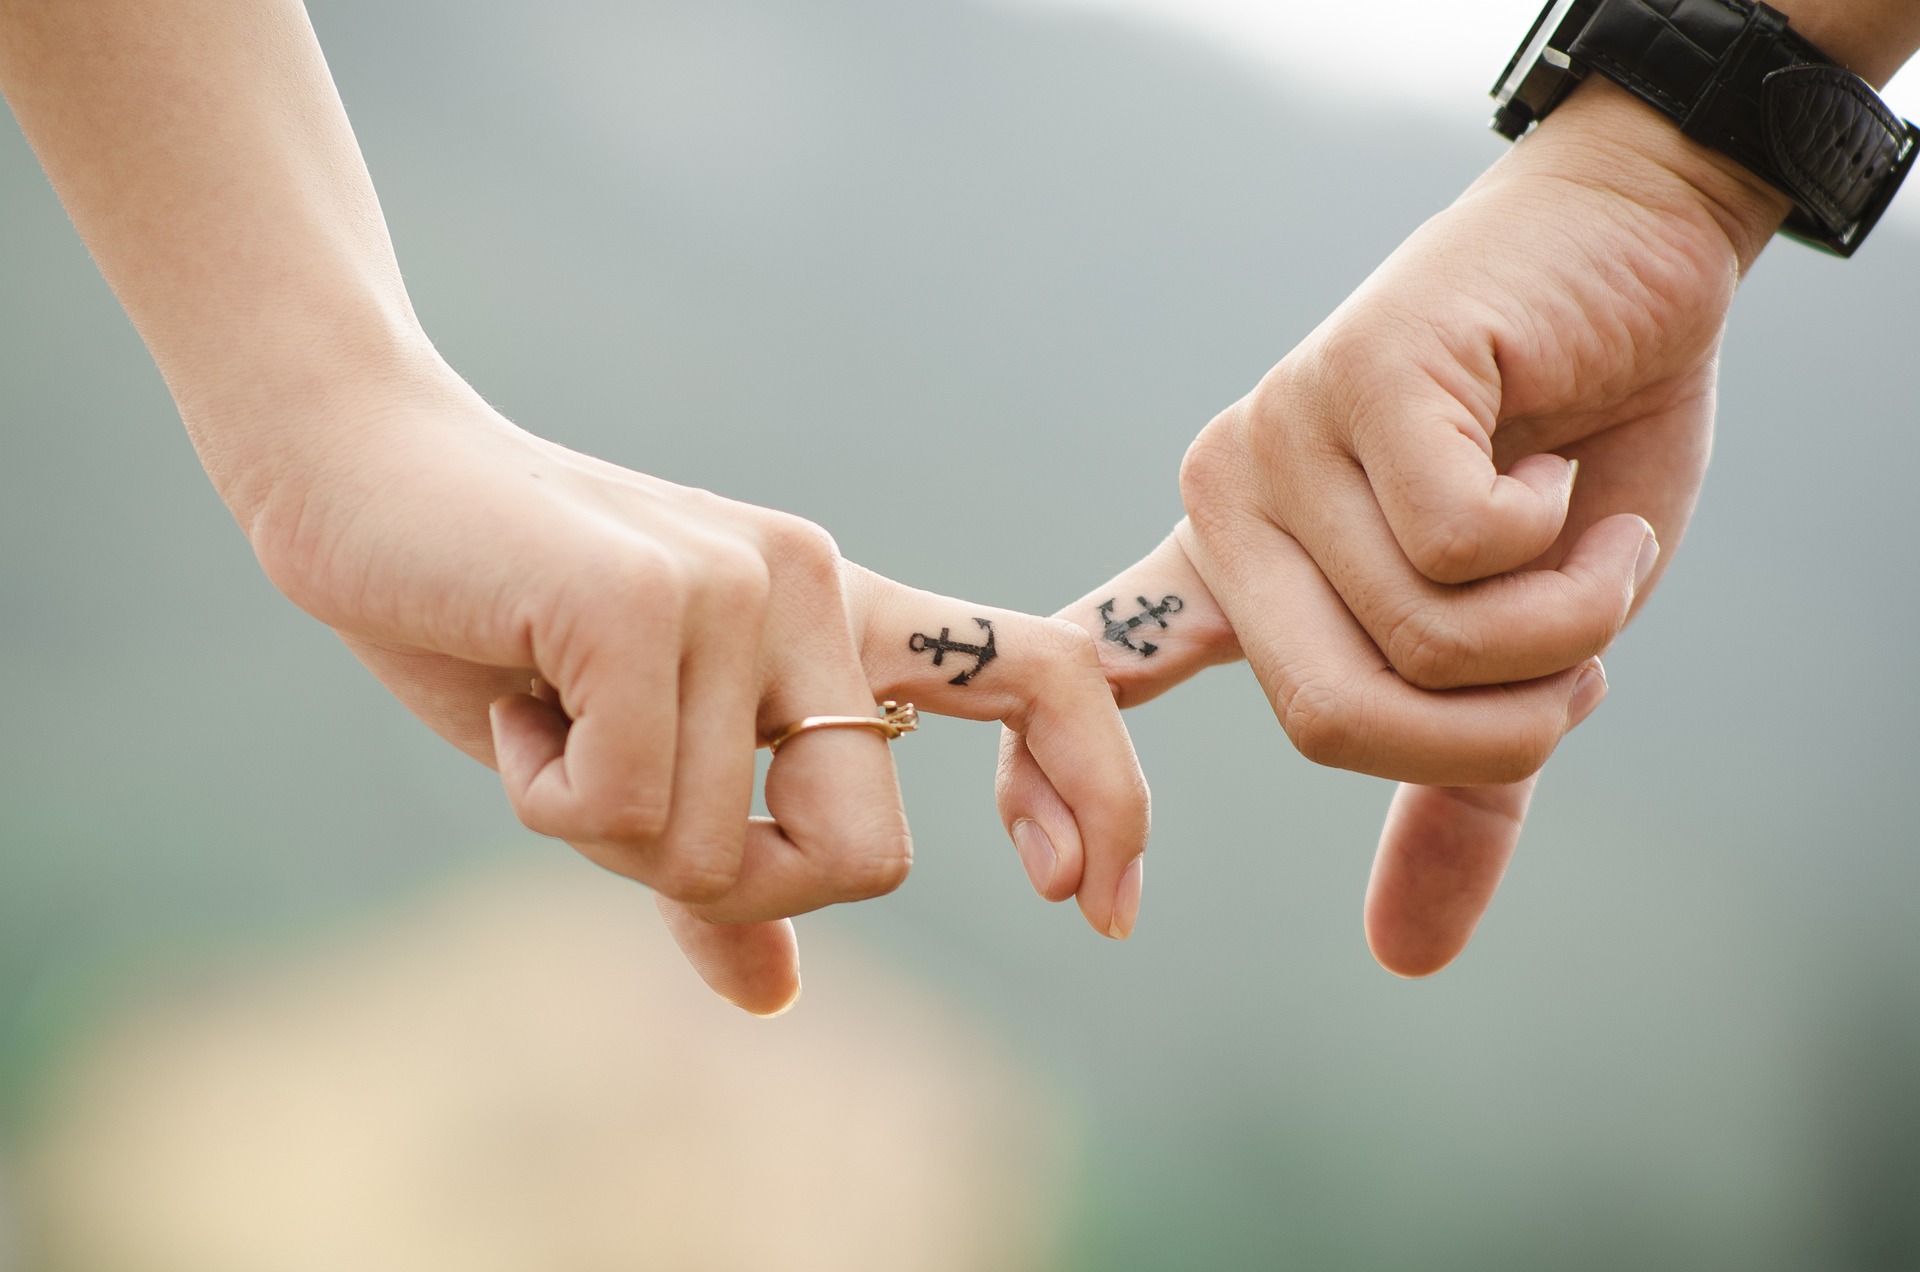 holding hands matching tatoos